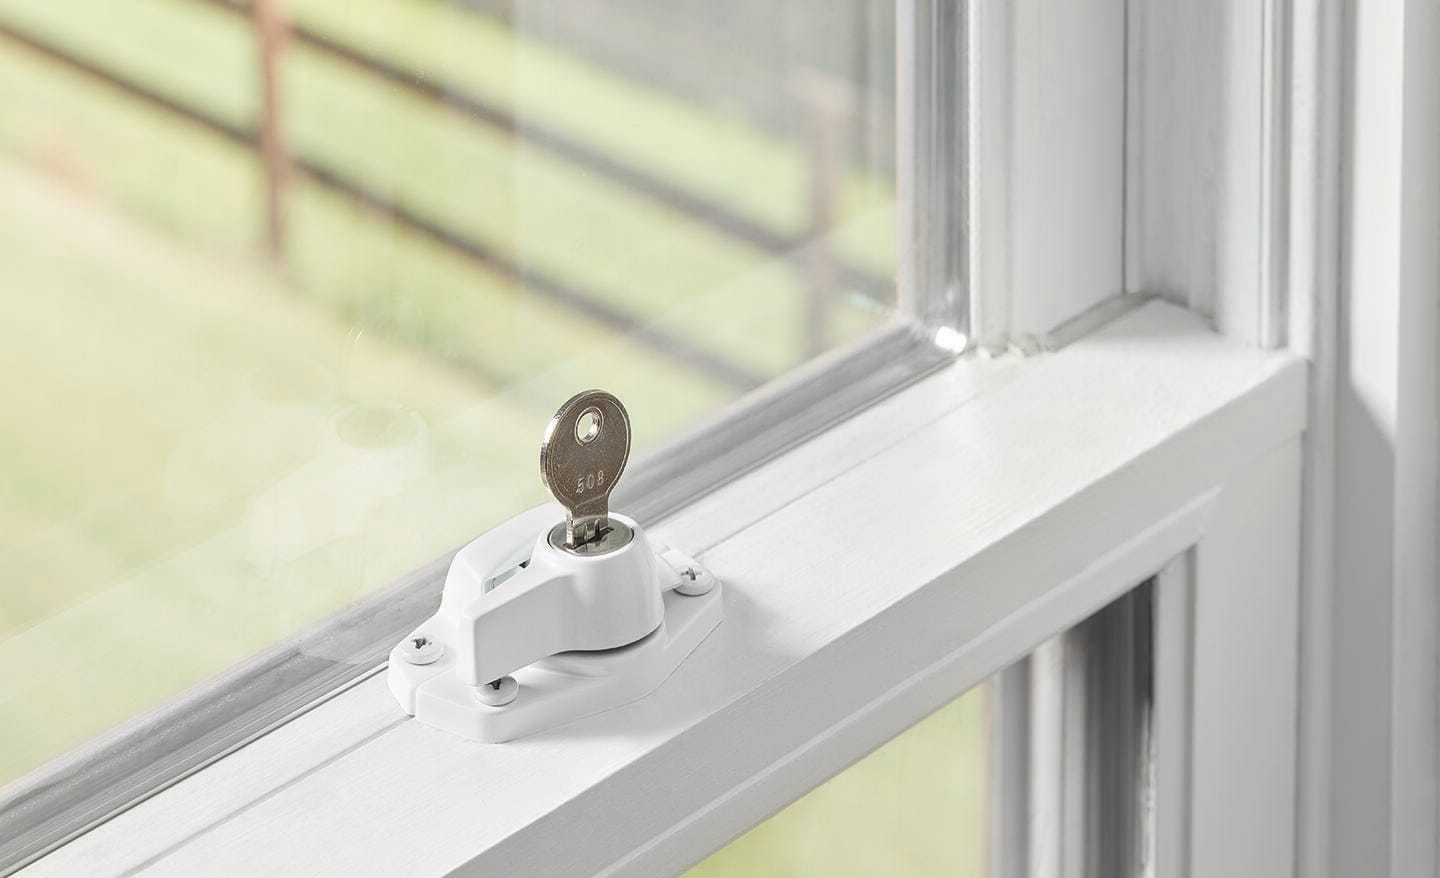 A key stands upright in a window lock.